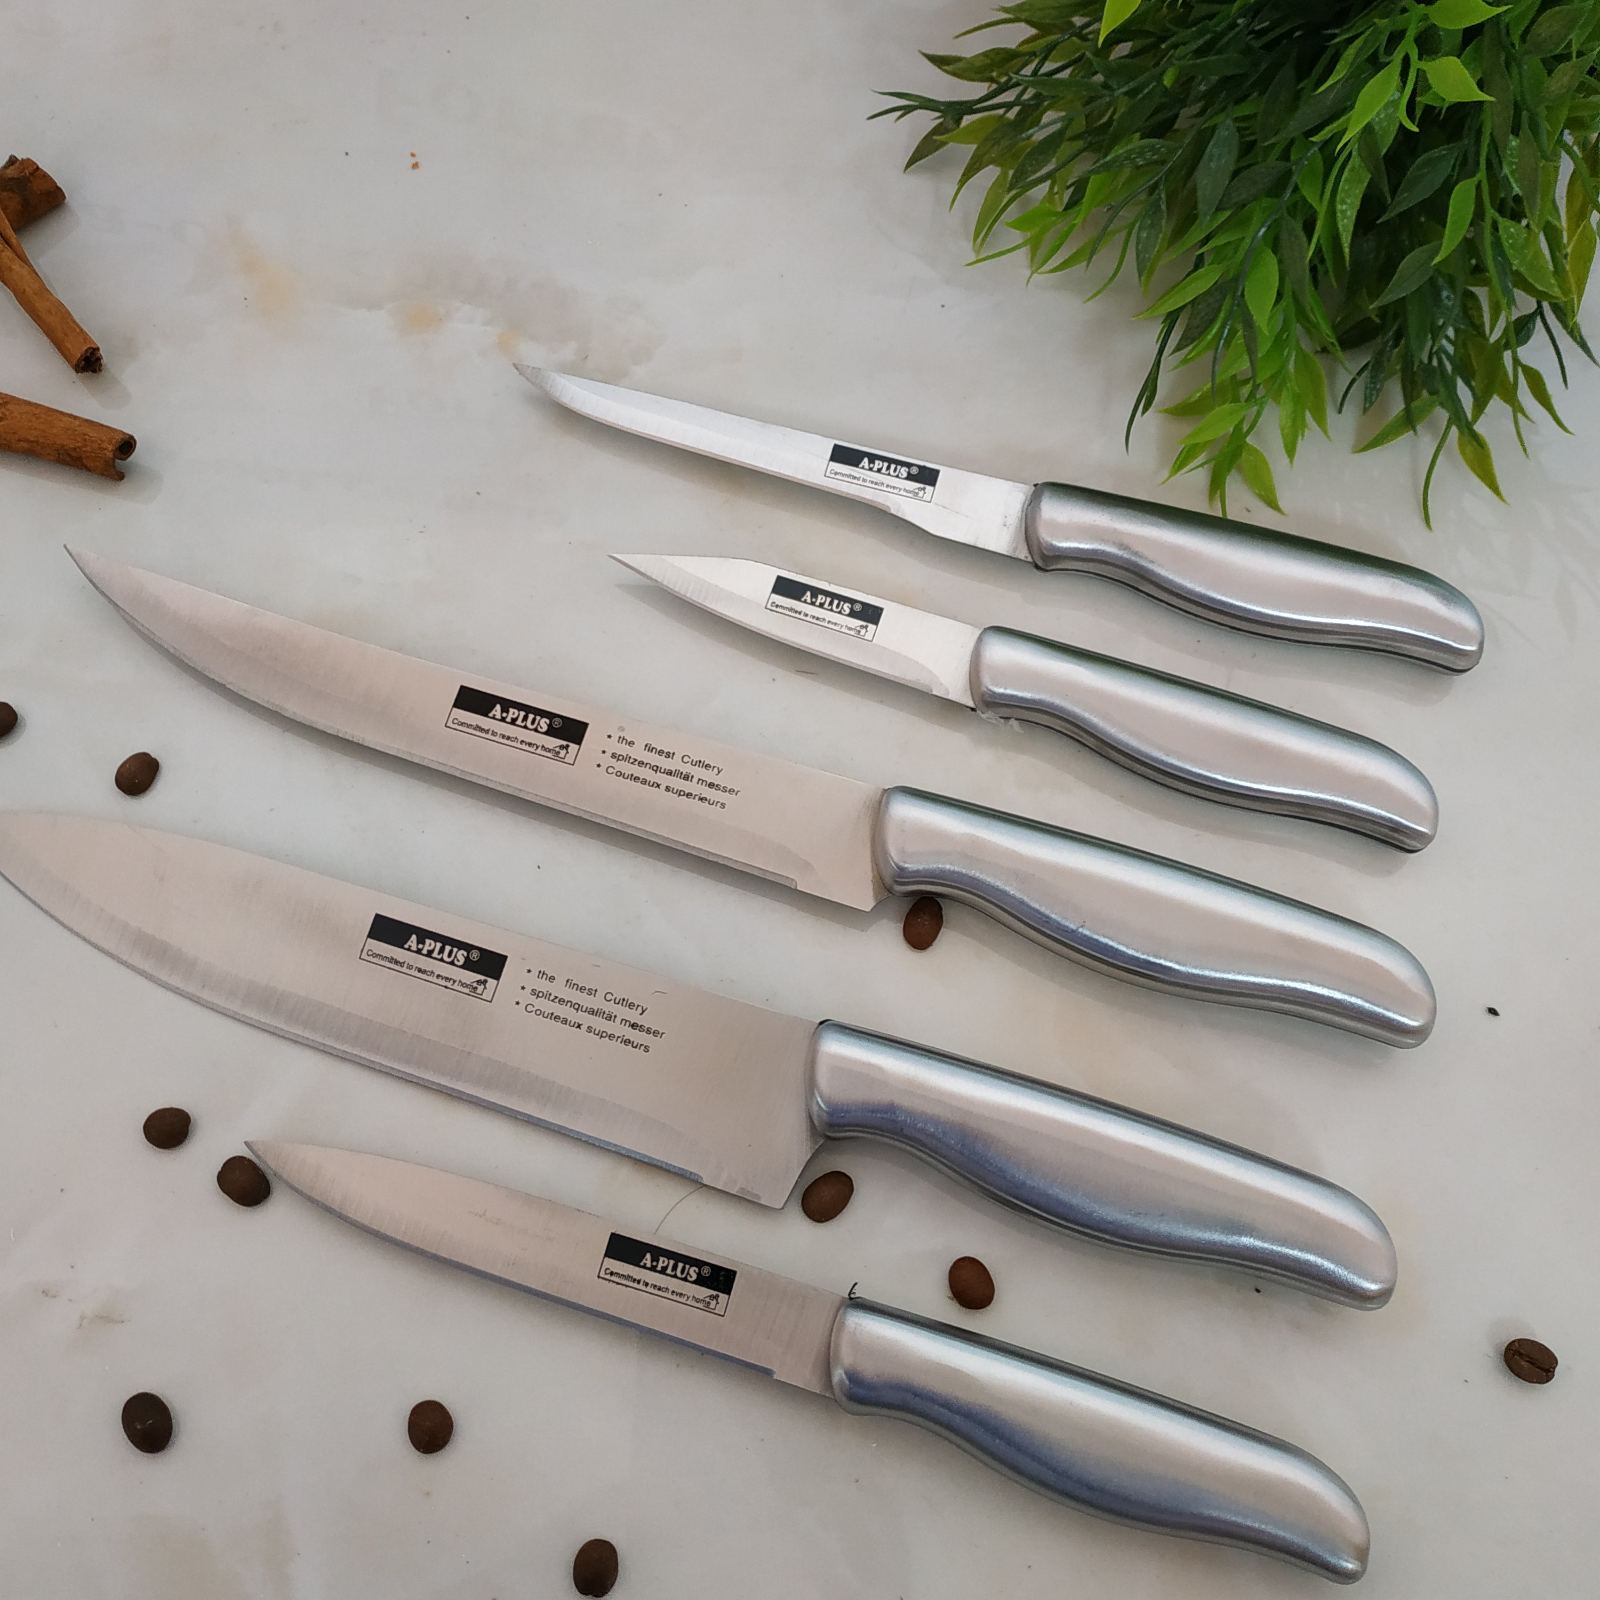 Набор ножей A-Plus - 1006 (7 предметов) ✅ базовая цена $9.66 ✔ Опт ✔ Скидки ✔ Заходите! - Интернет-магазин ✅ Фортуна-опт ✅